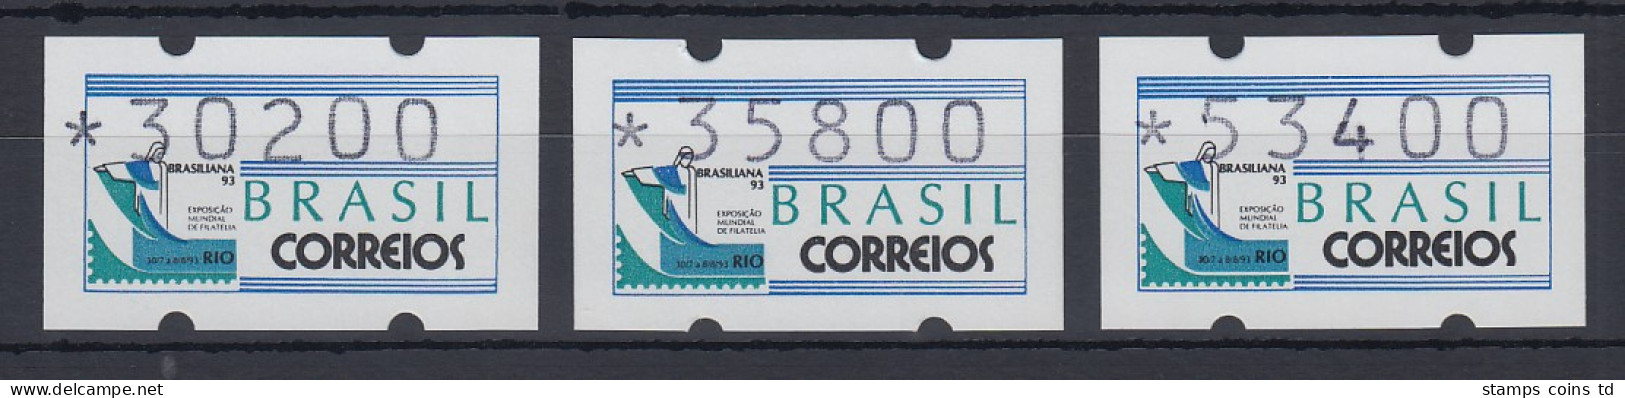 Brasilien Klüssendorf-ATM 1993 BRASILIANA Mi-Nr 5 Satz 30200 - 35800 - 53400 ** - Frankeervignetten (Frama)